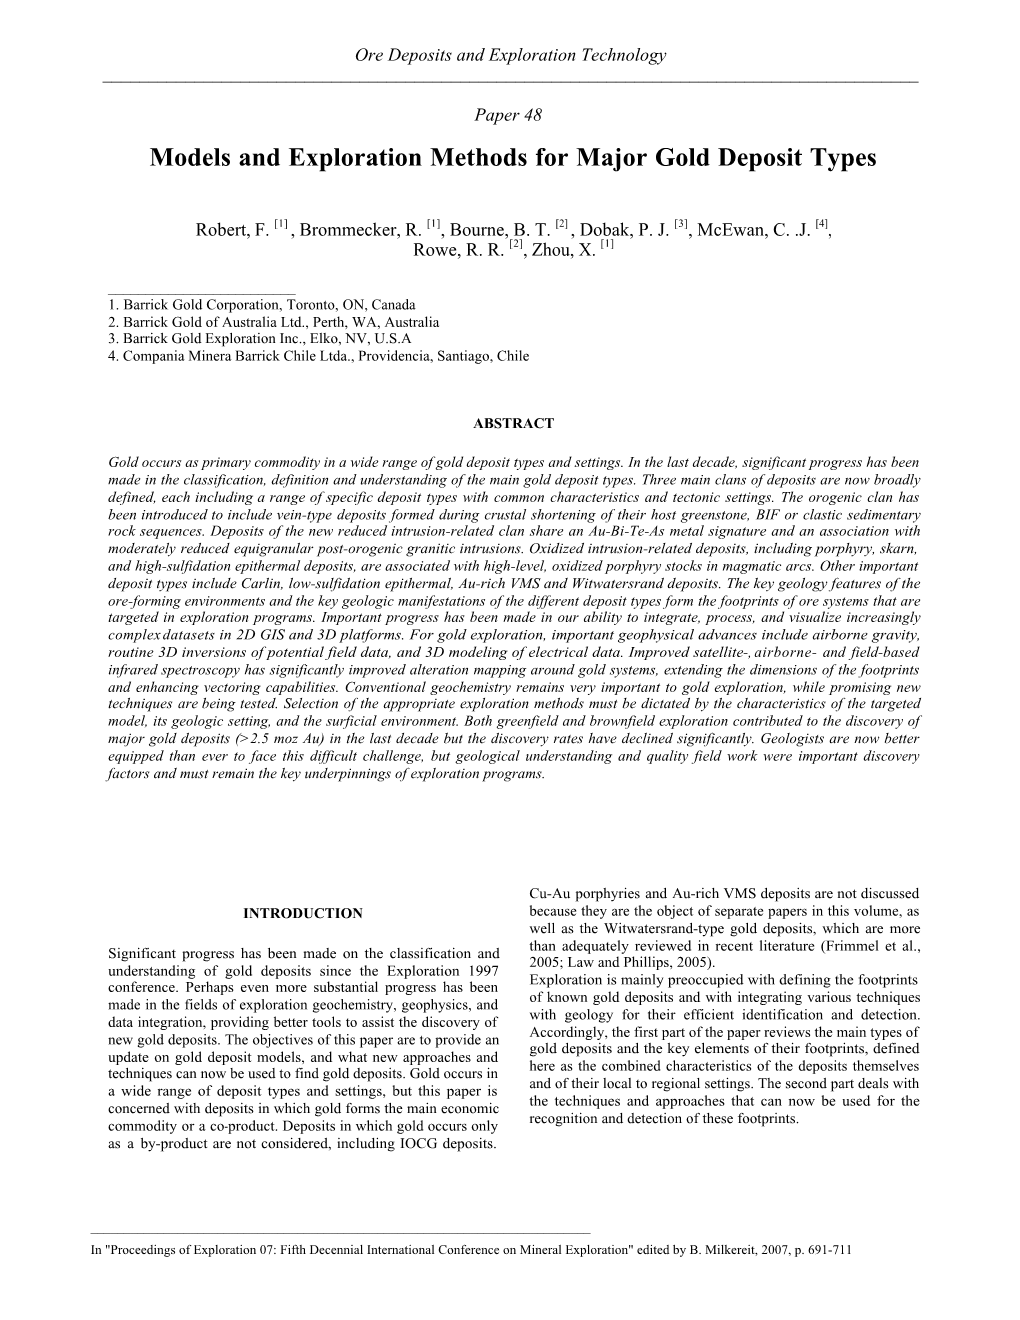 Models and Exploration Methods for Major Gold Deposit Types